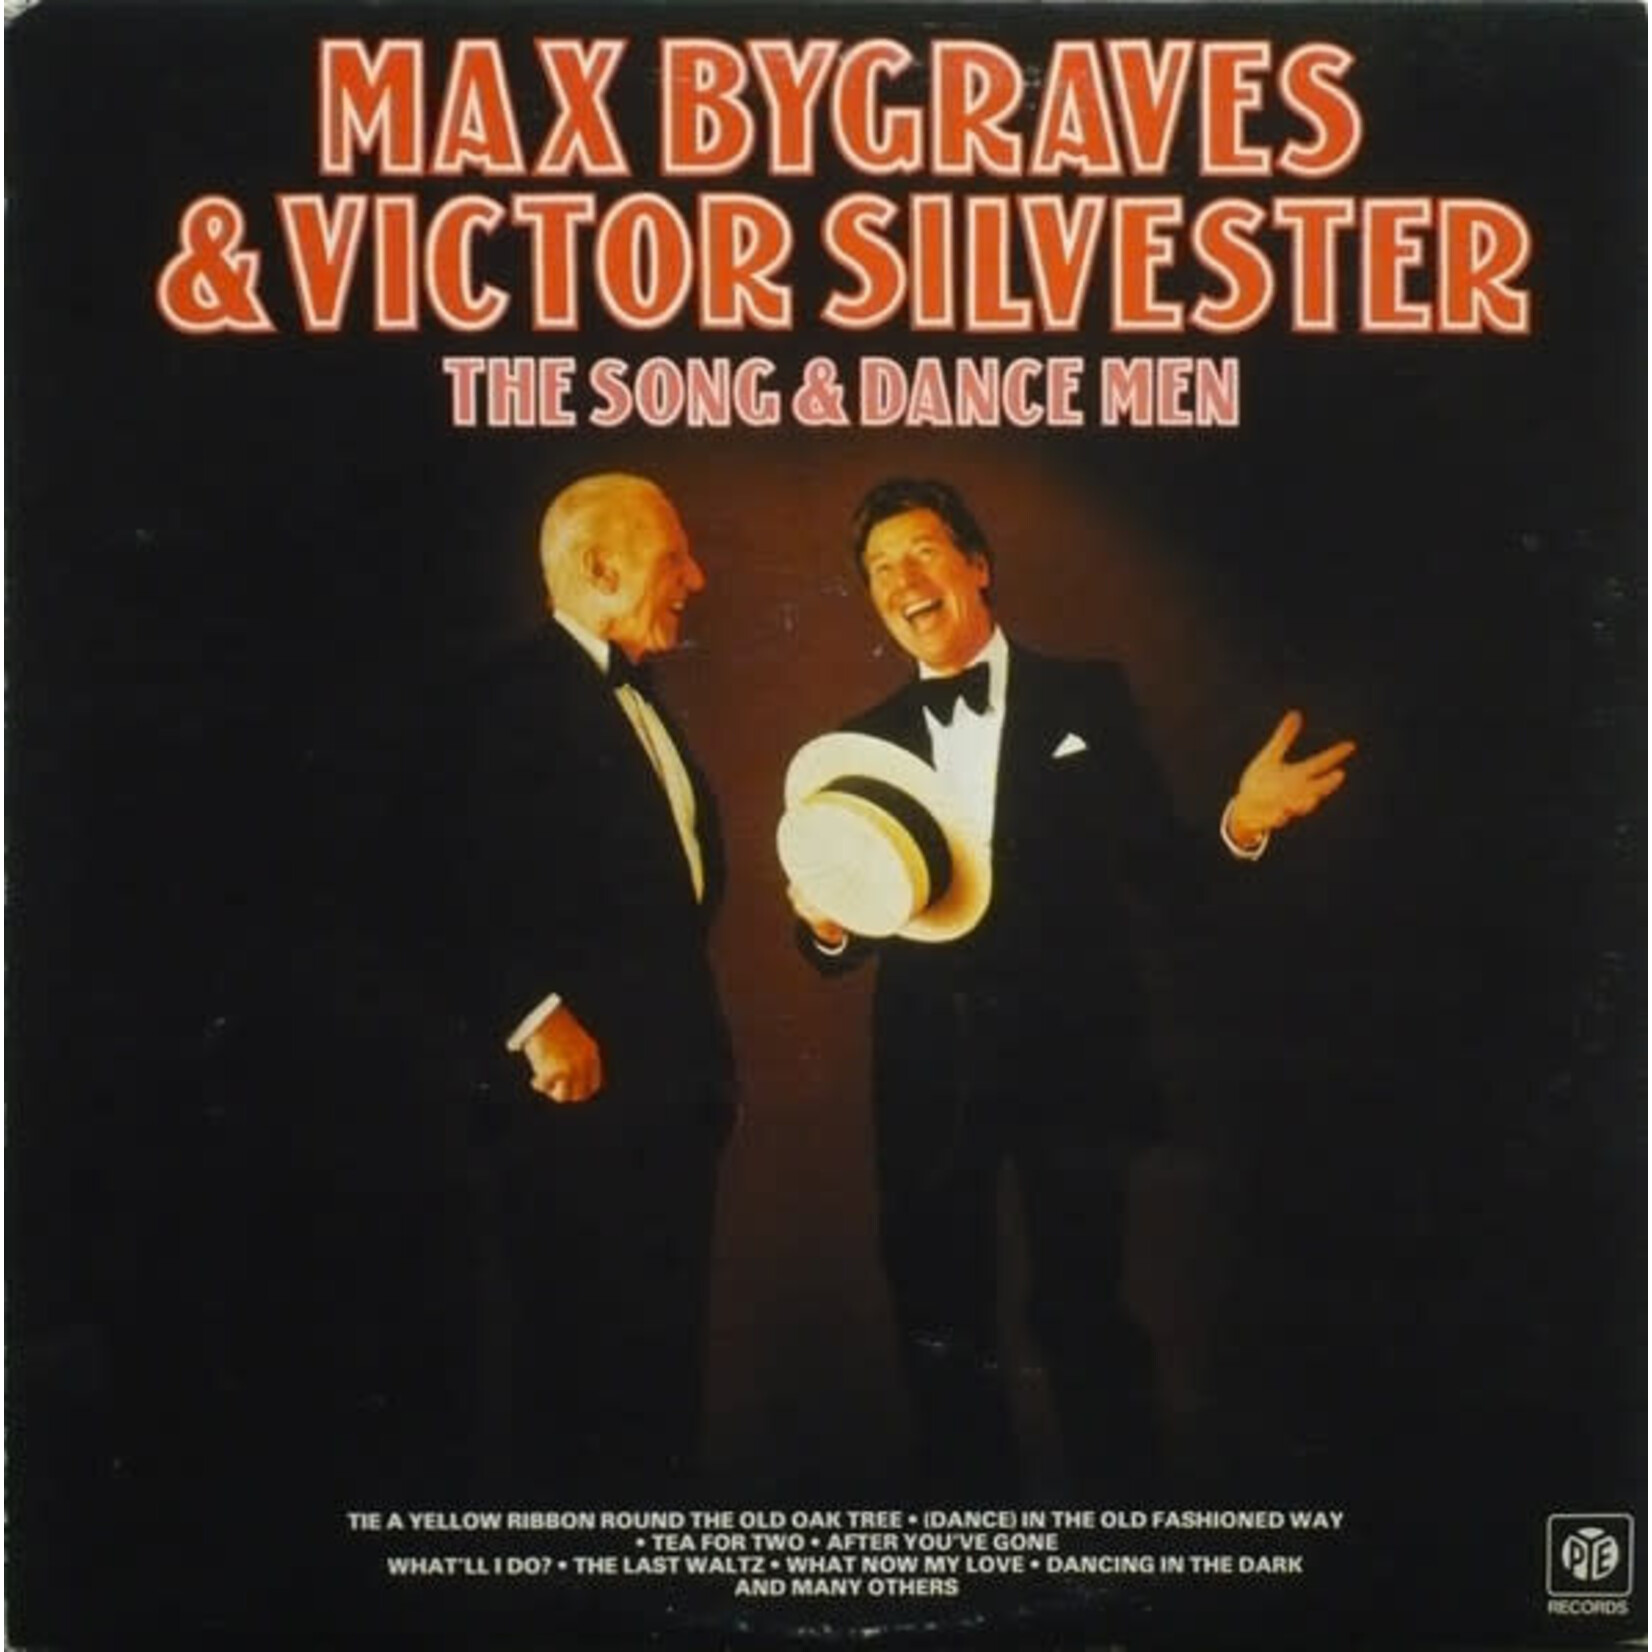 Max Bygraves & Victor Silvester – The Song & Dance Men (FACTORY SEALED, 1978, LP, 1978, Pye Records – NSPL 18574) DSG